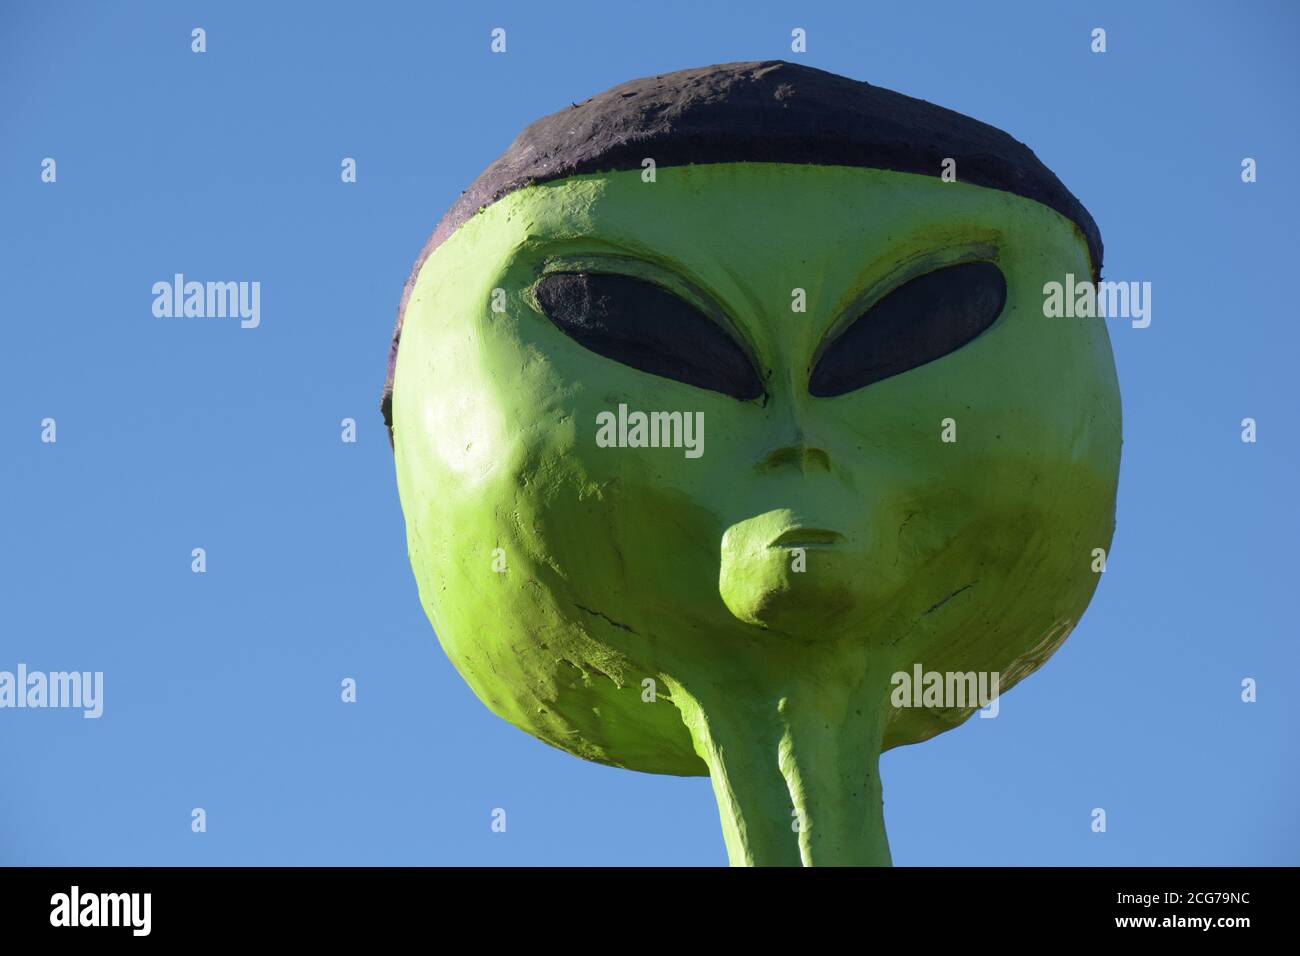 alien green alien ufo on the ground flying saucer Stock Photo